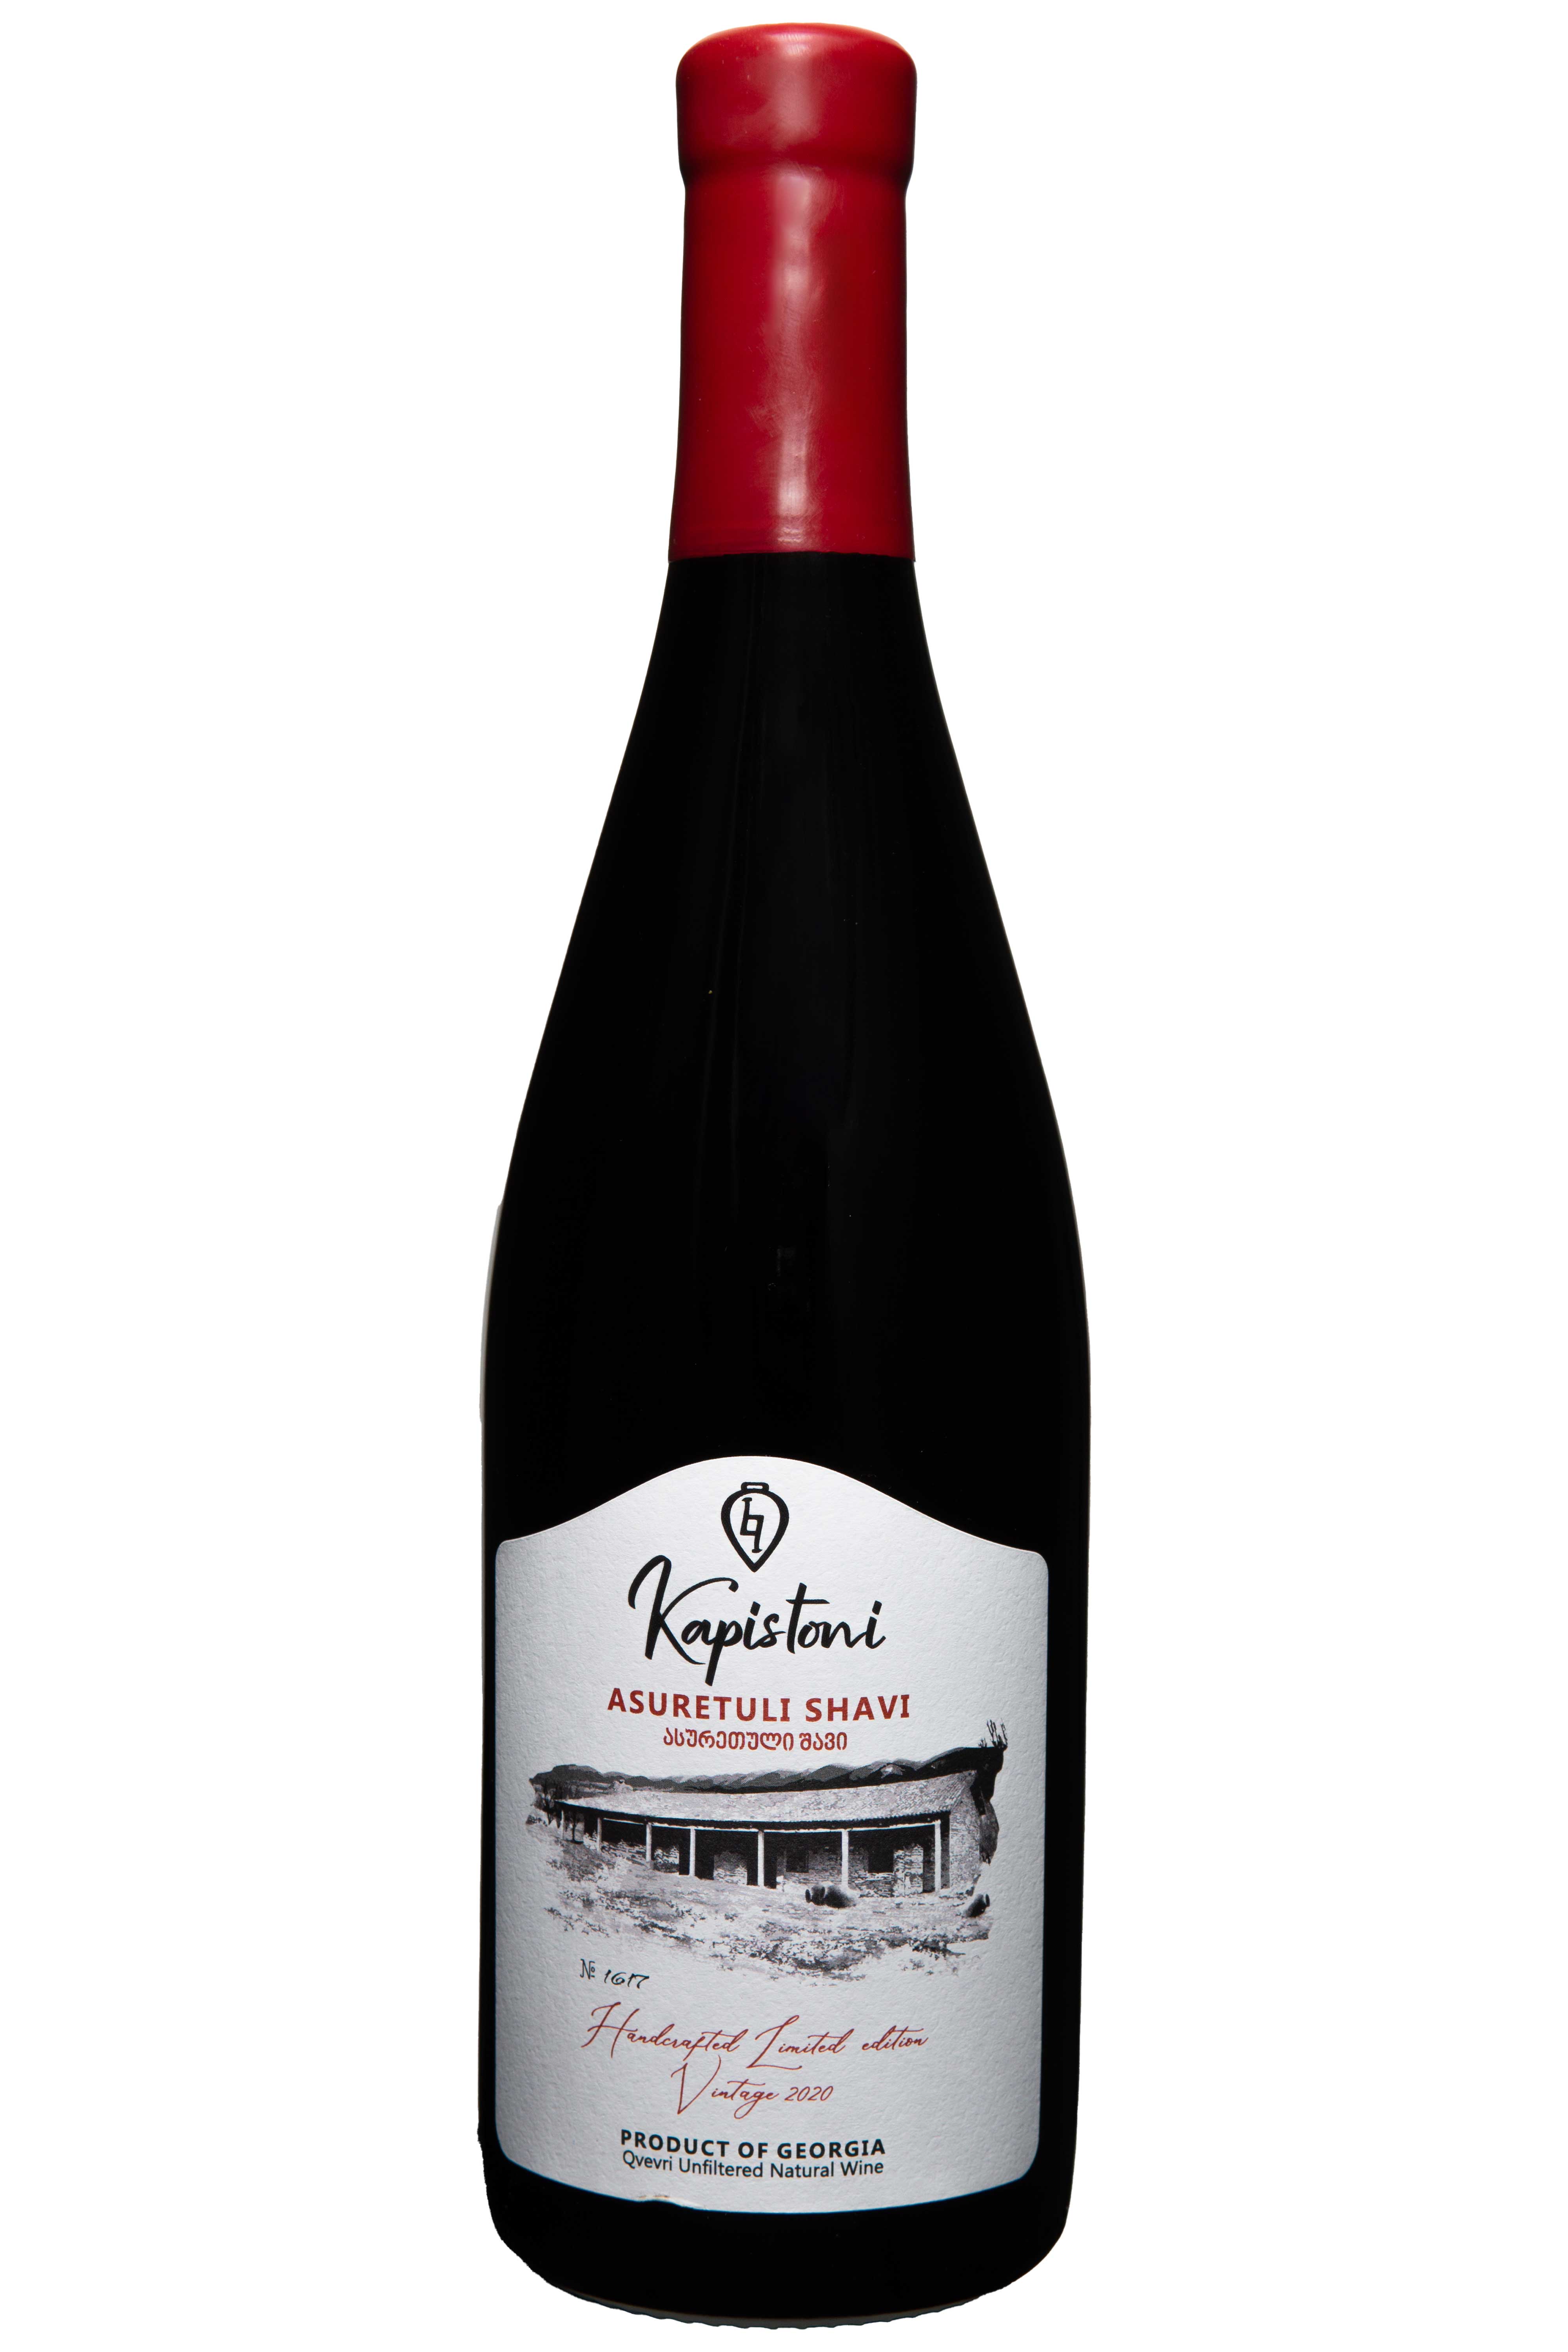 Flasche Kapistoni Asuretuli Shavi, georgischer Rotwein, intensive rubinrote Farbe, ausgewogene Tannine, Jahrgang 2021